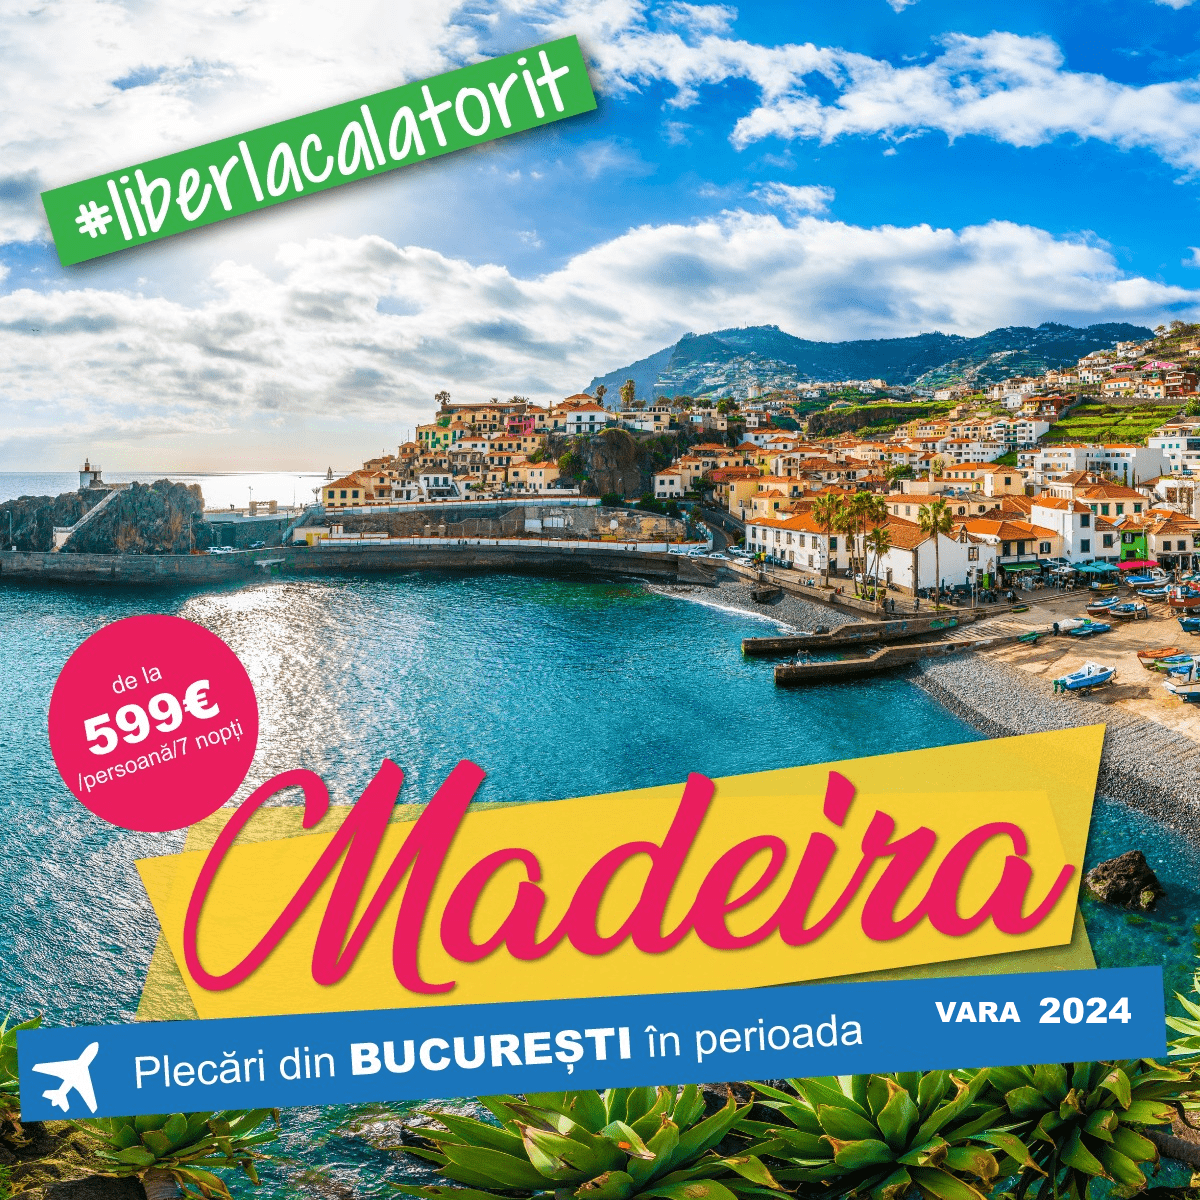 Vacante last minute charter avion Madeira - Portugalia - vara 2024 - zbor din Bucuresti - rezervari online - callcenter: 0766 264 594.